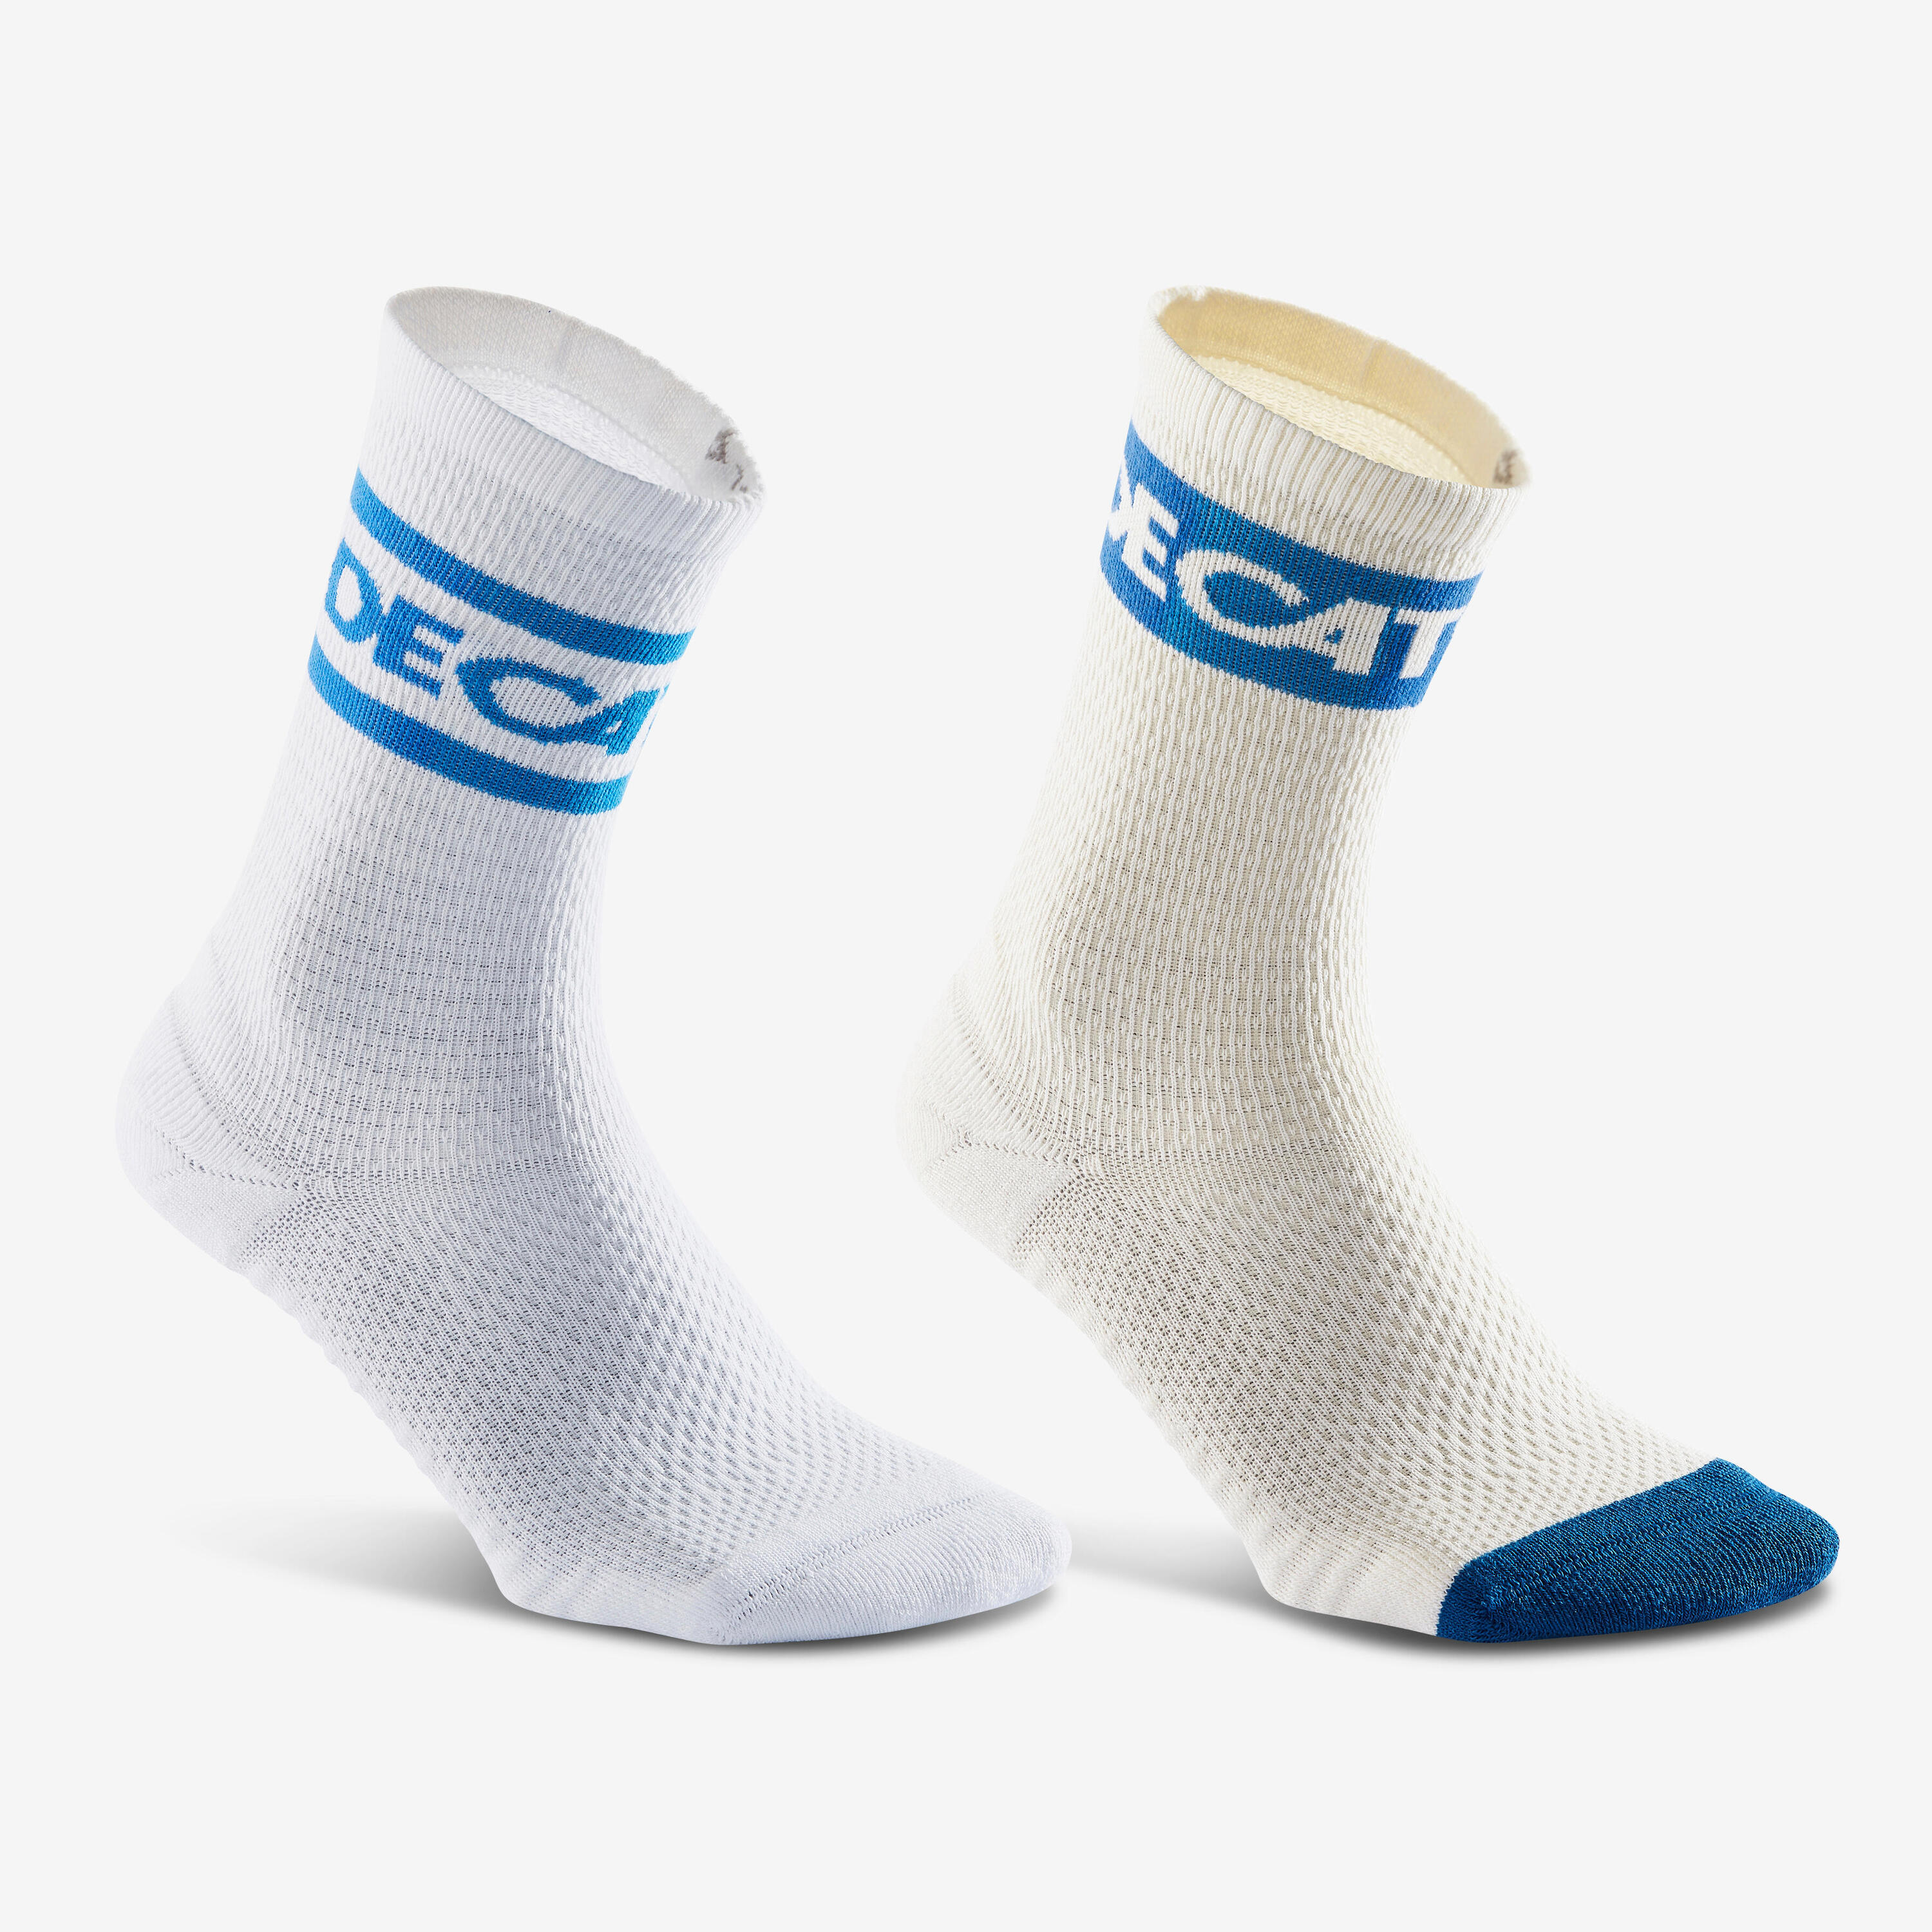 NEWFEEL High socks Decathlon Héritage logo 2-Pair Pack - White/Beige